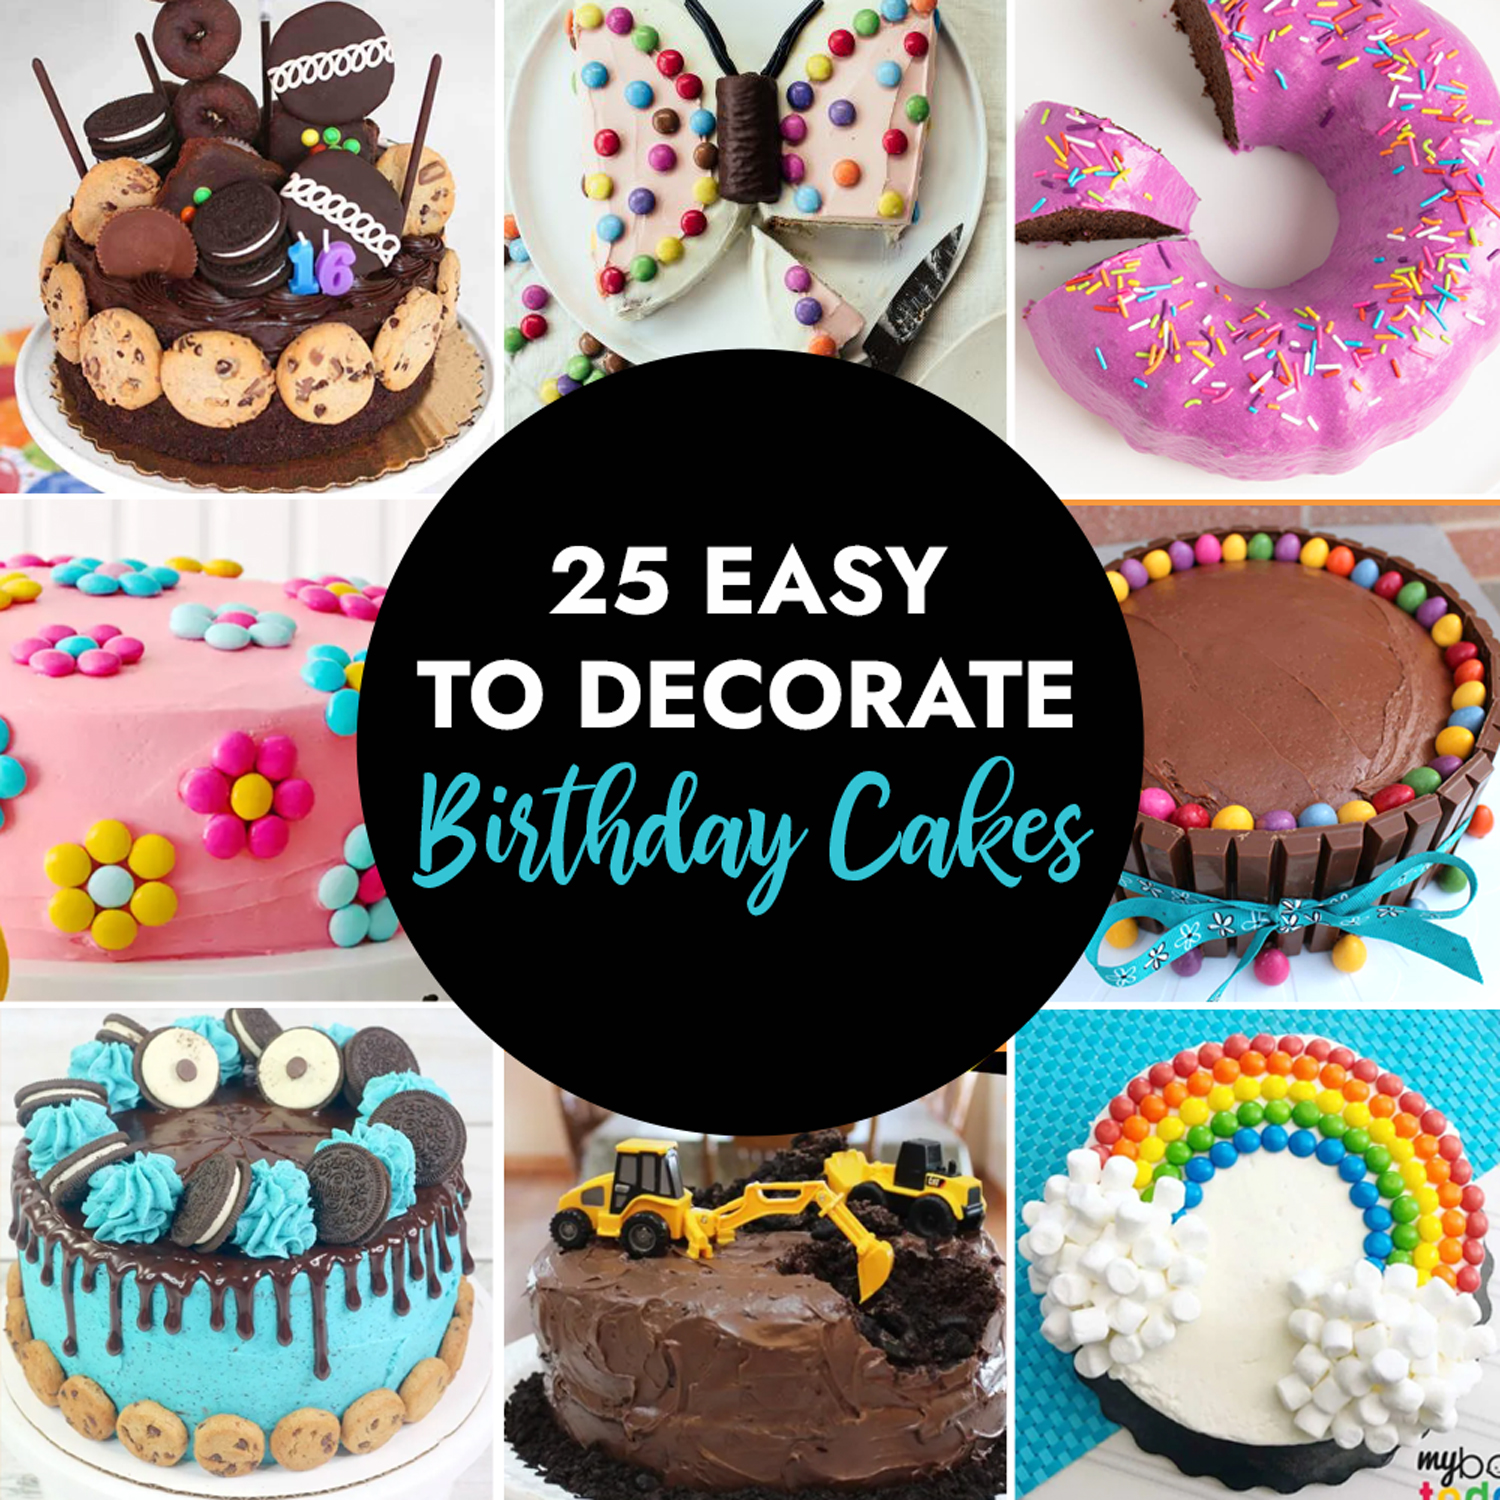 Edible Cake Decorations - Cake Art